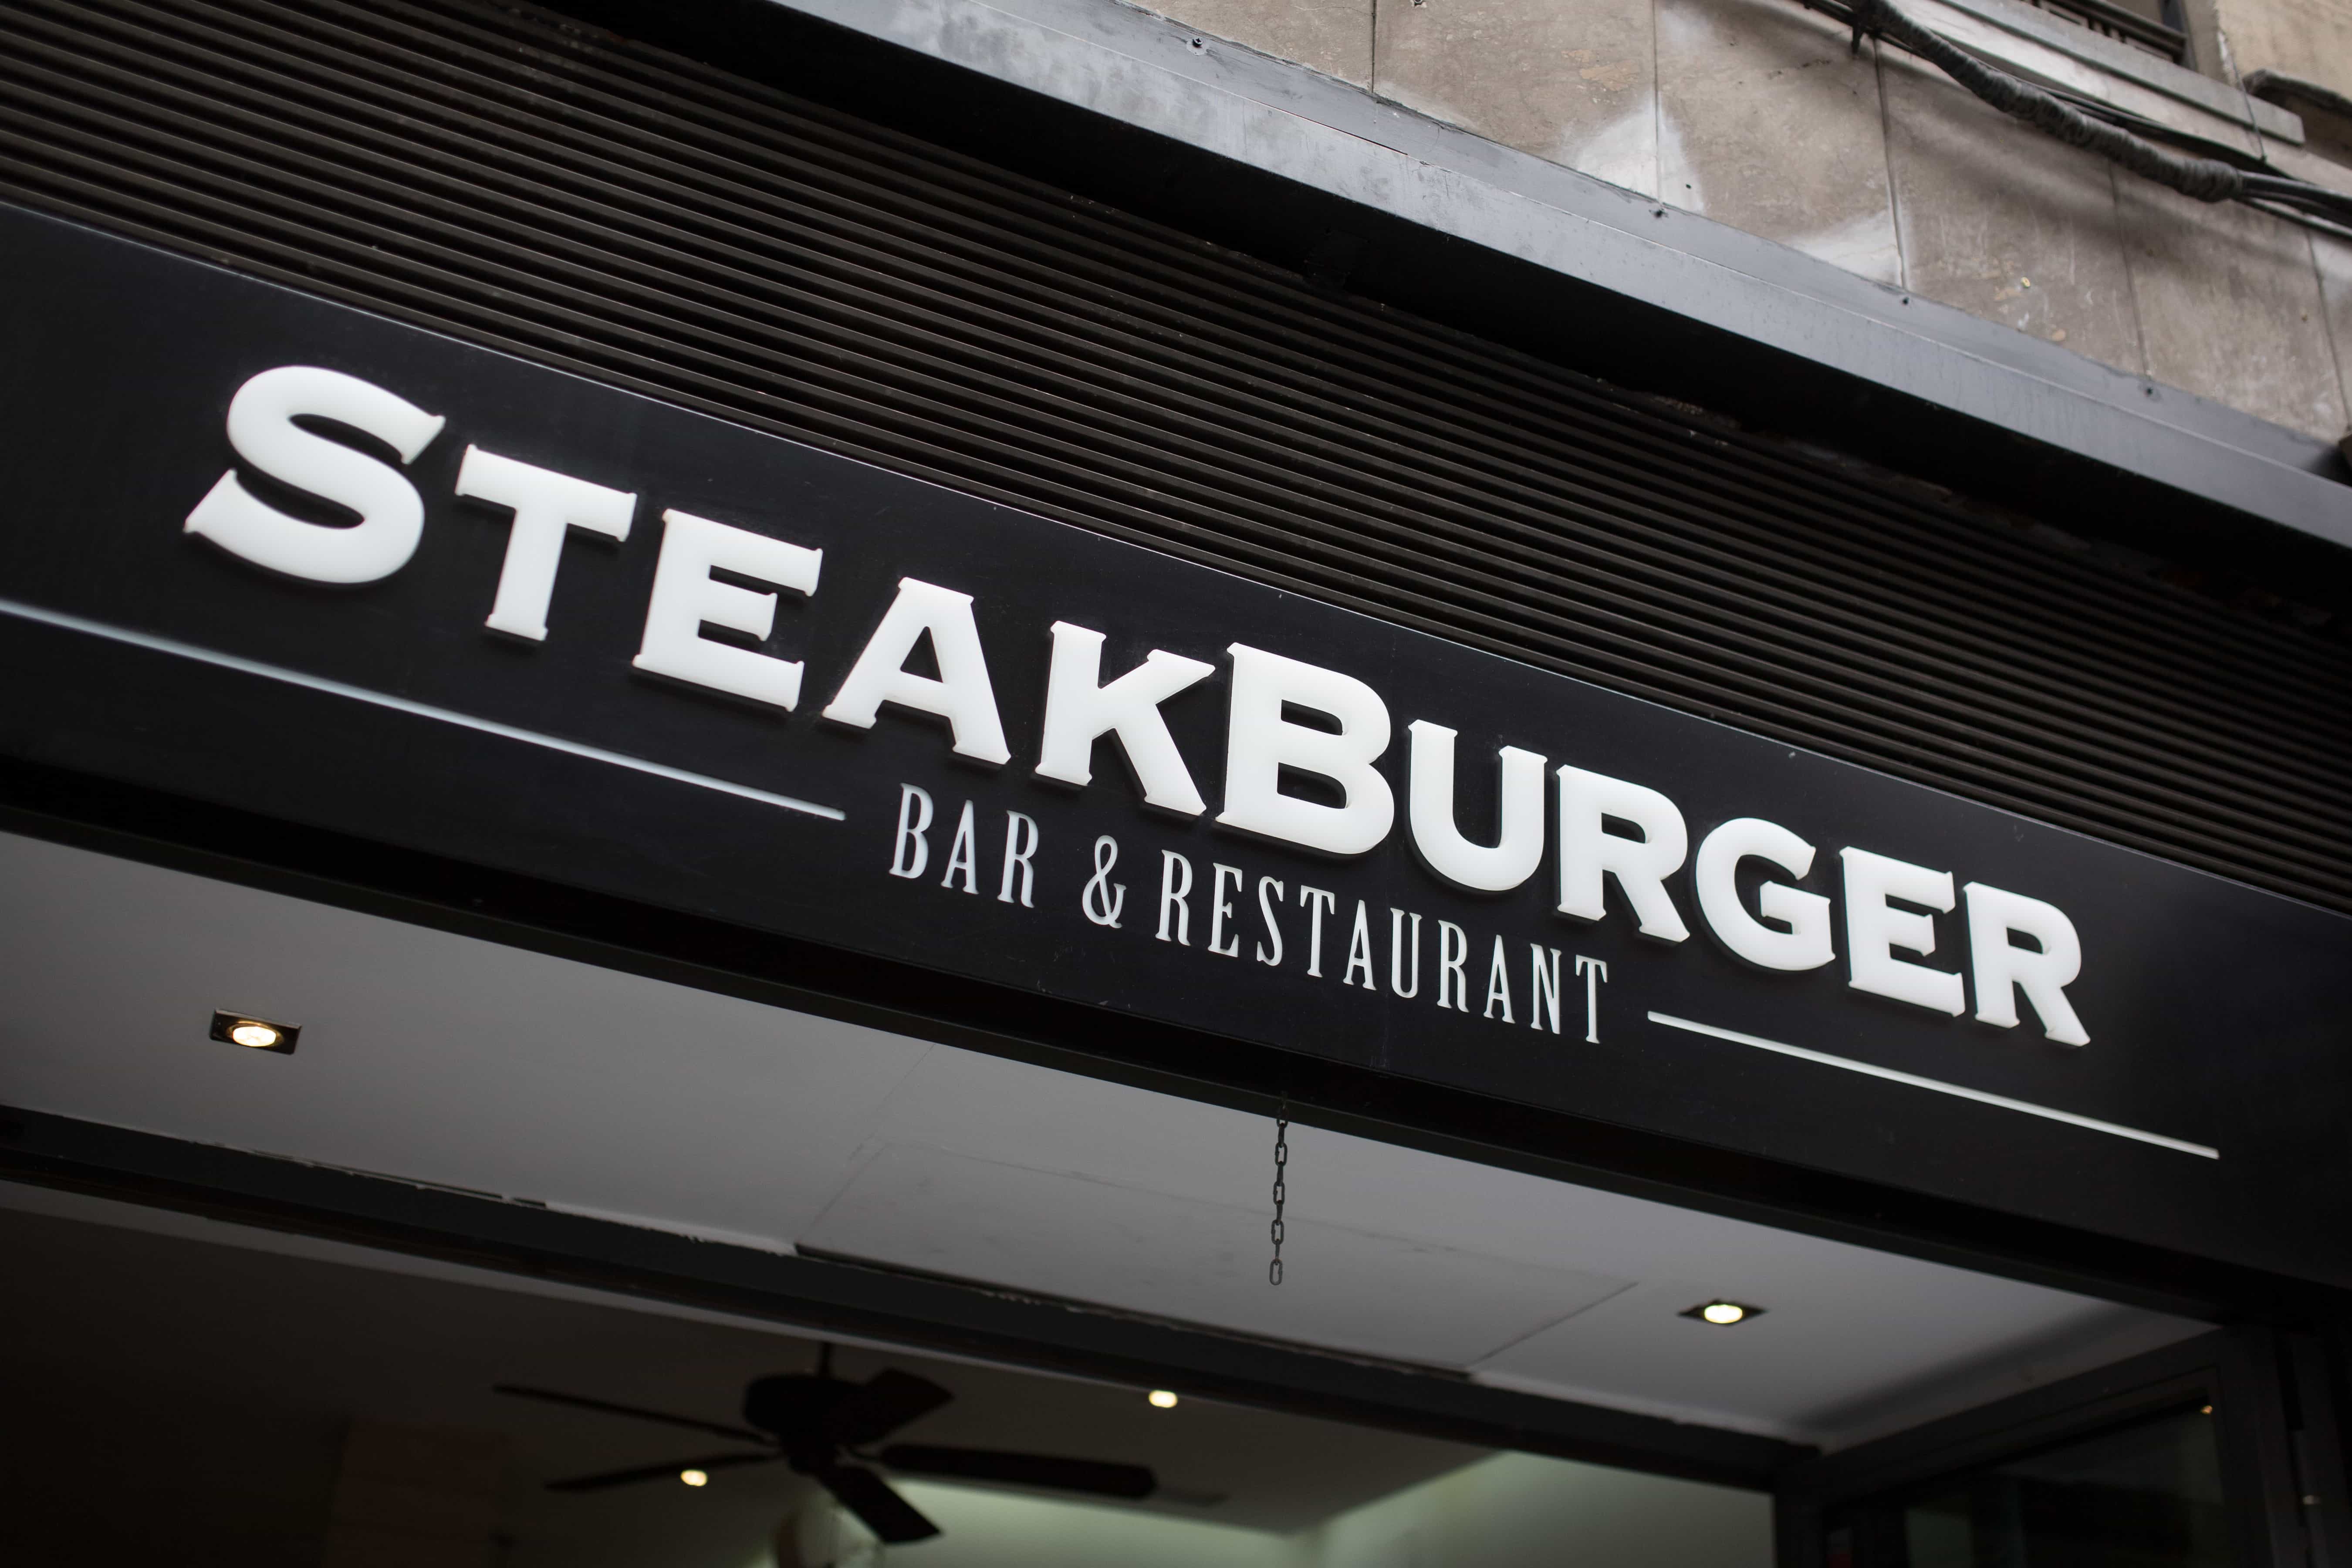 Be clever: Visit Steak Burger, the real burger